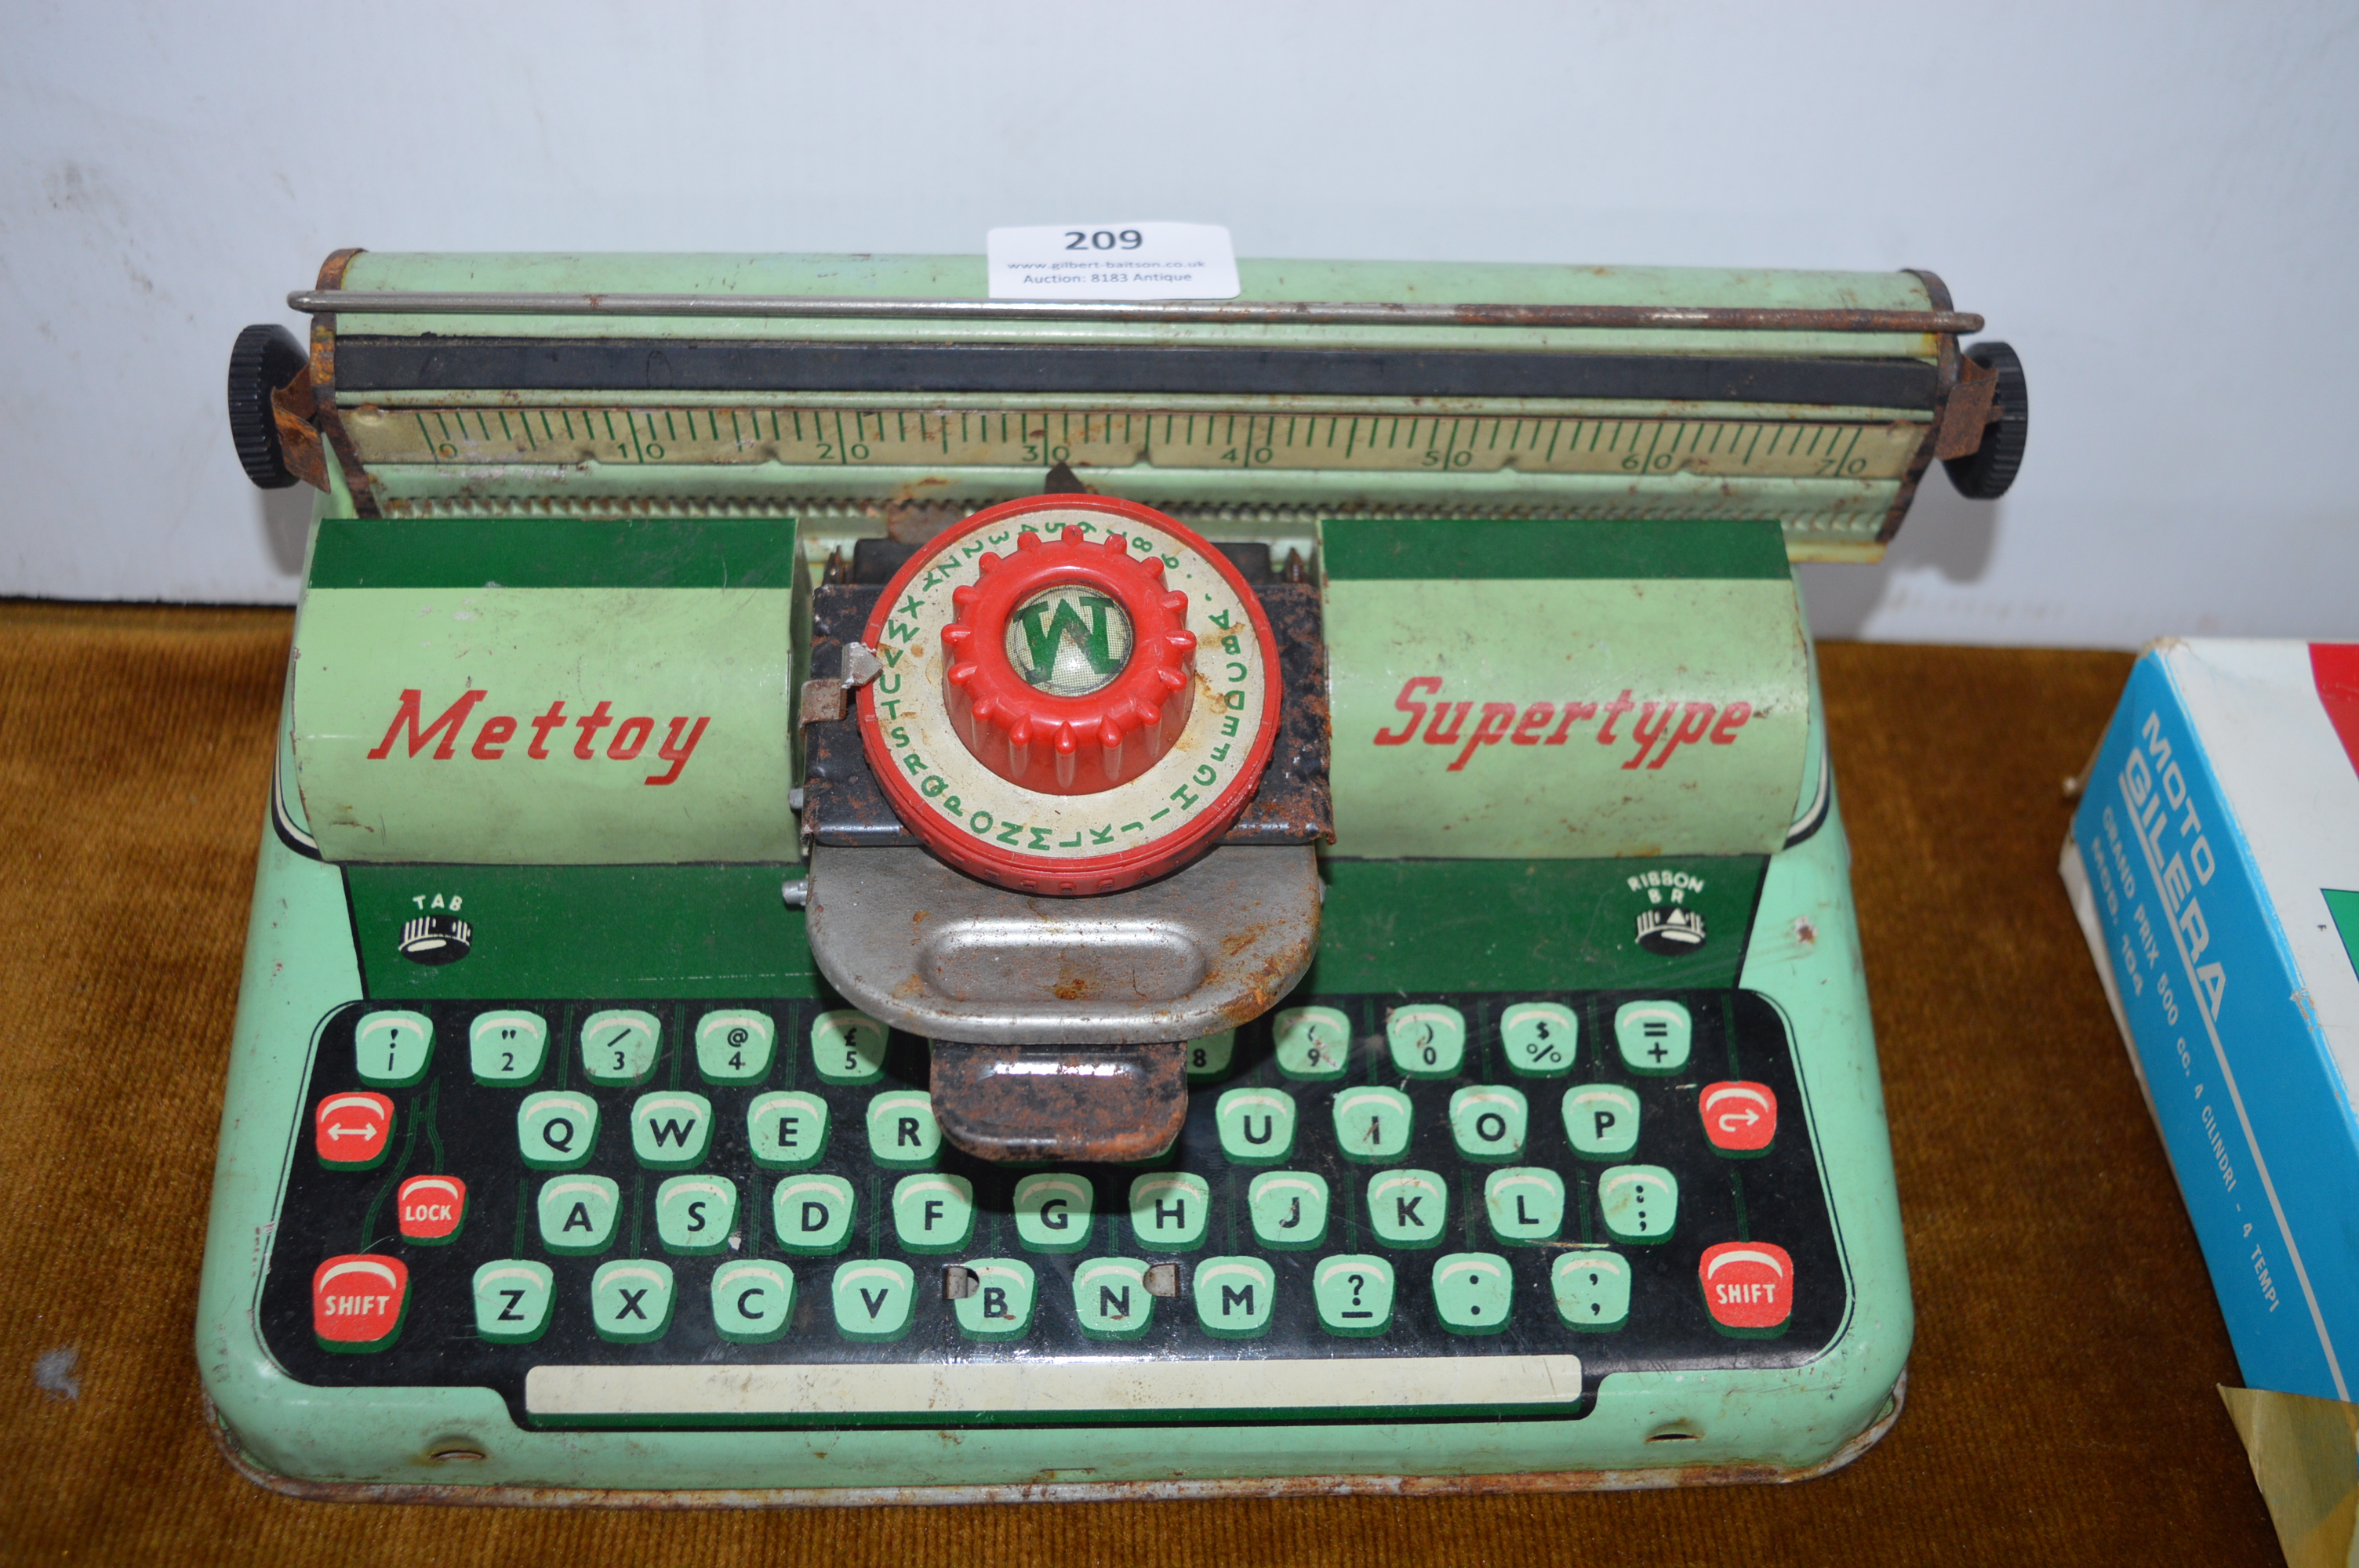 Mettoy Supertype Tinplate Child's Typewriter - Image 2 of 3